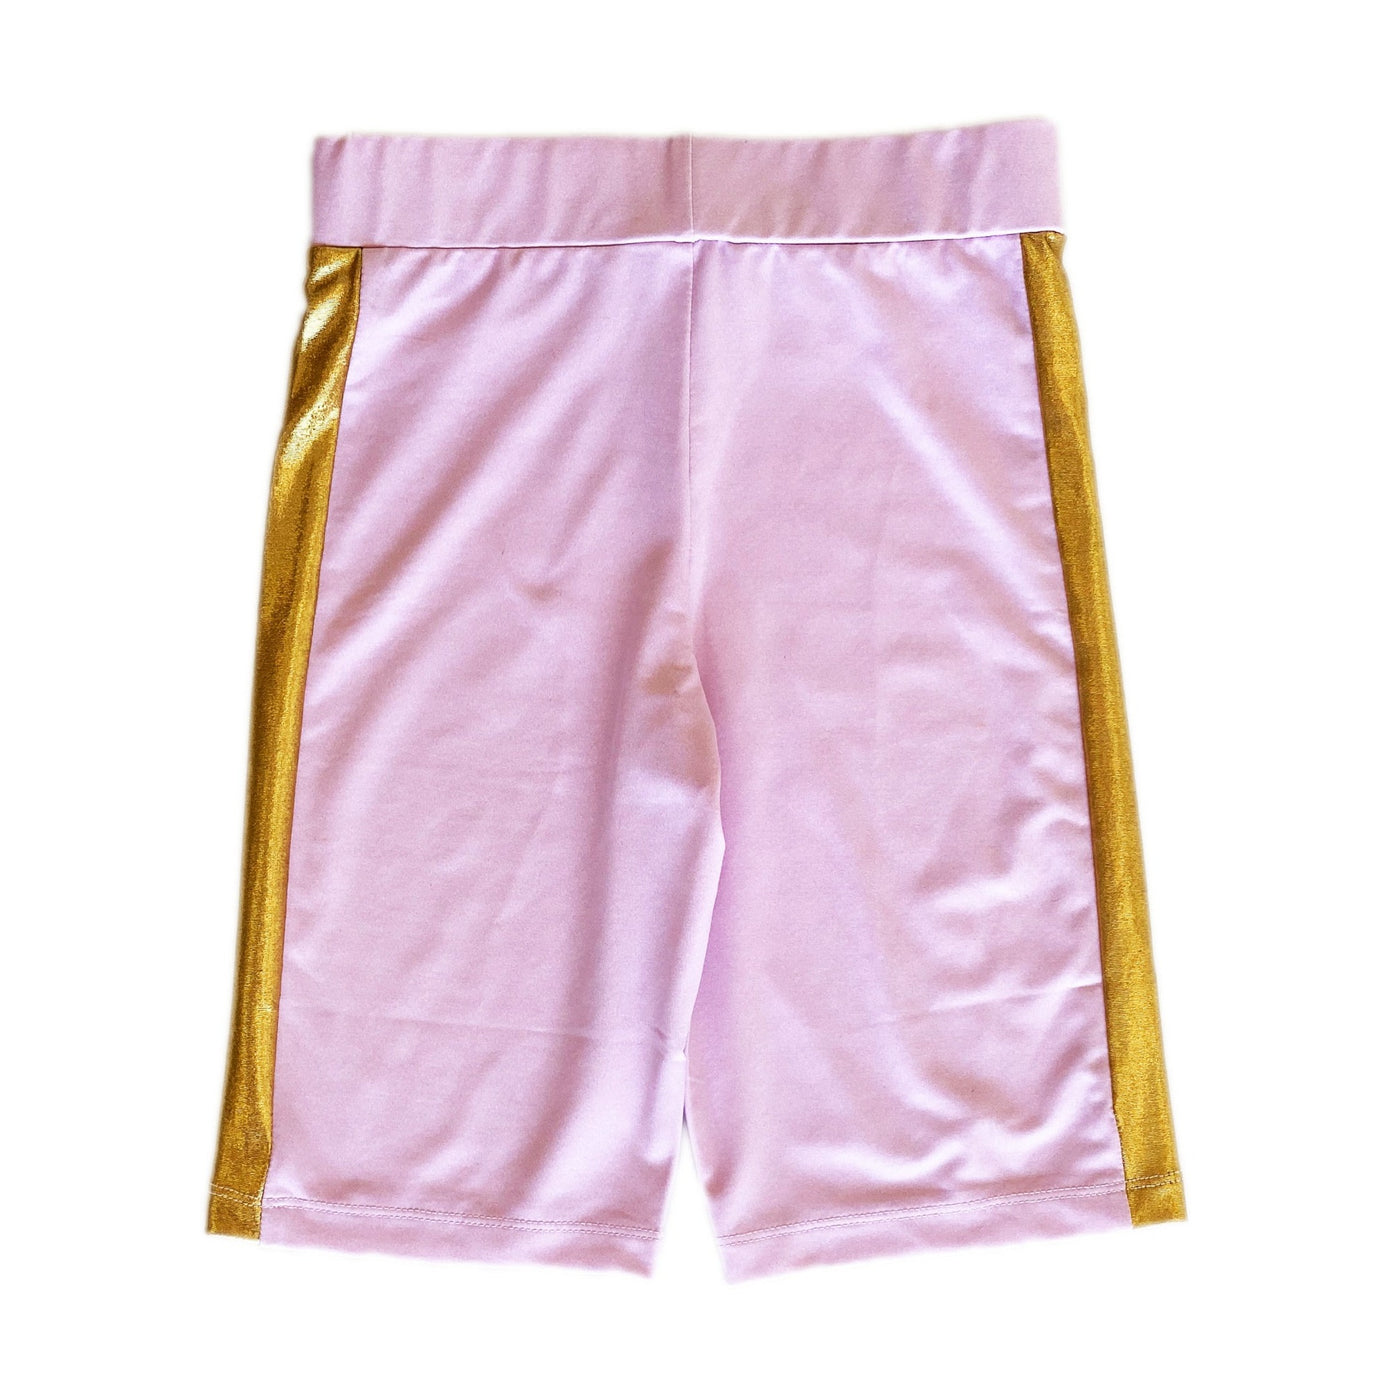 ONJ Bike Pants - Tafetta Pink Shorts Bella & Lace 